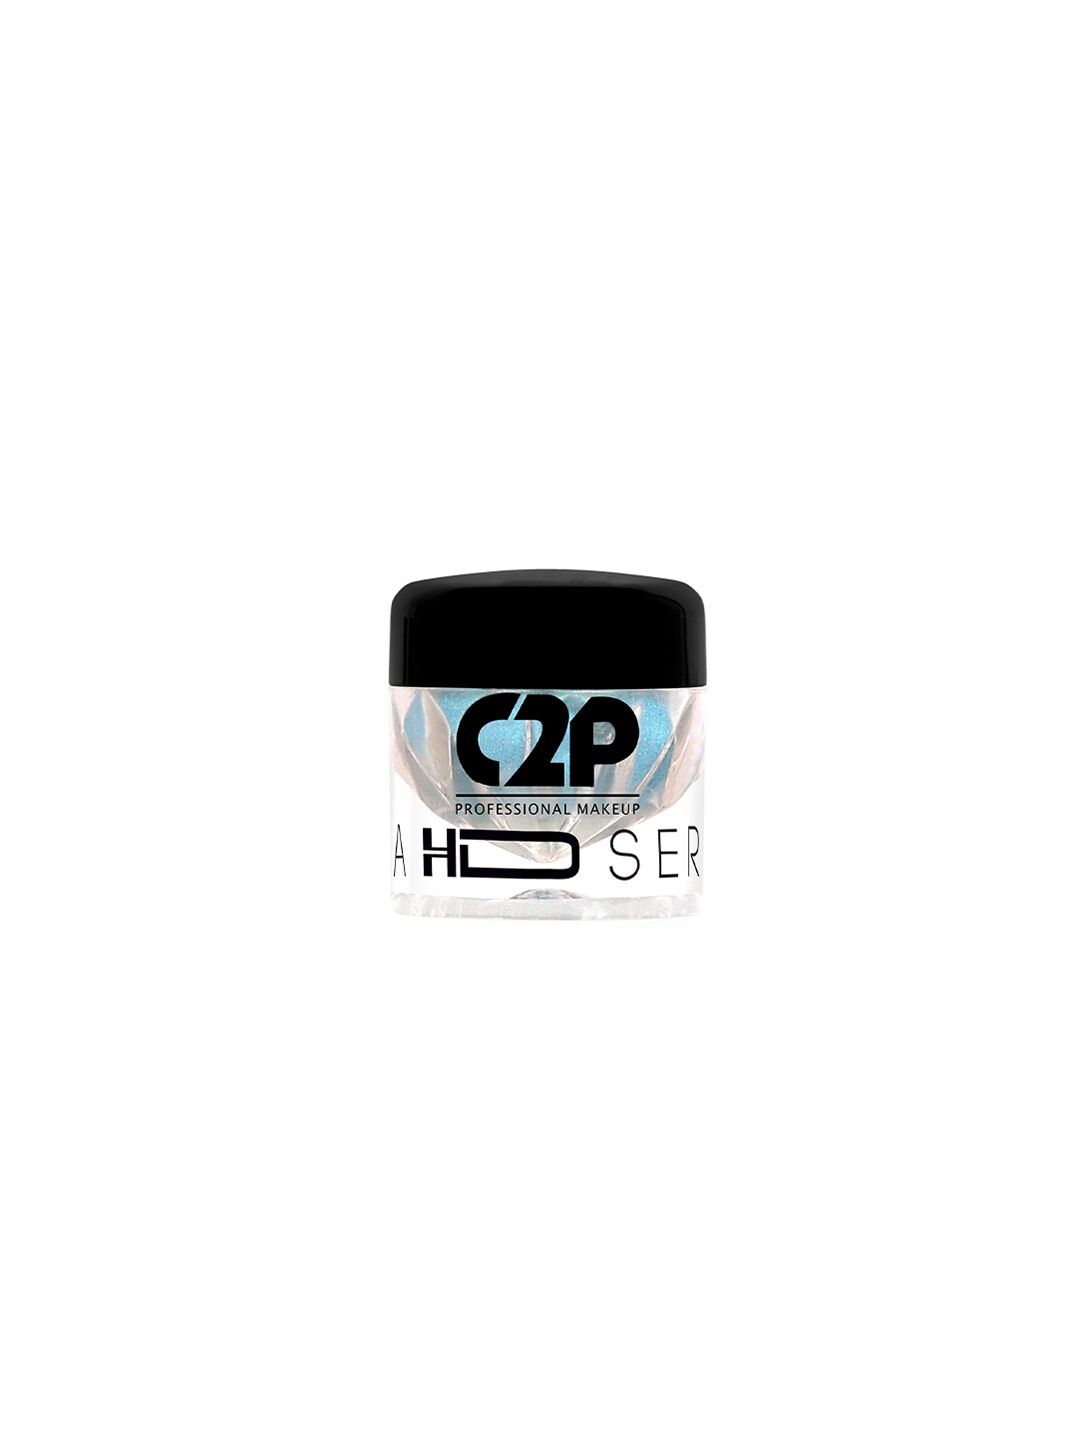 C2P PROFESSIONAL MAKEUP HD Loose Precious Pigments 2 g - Aqua Shine 64 Price in India